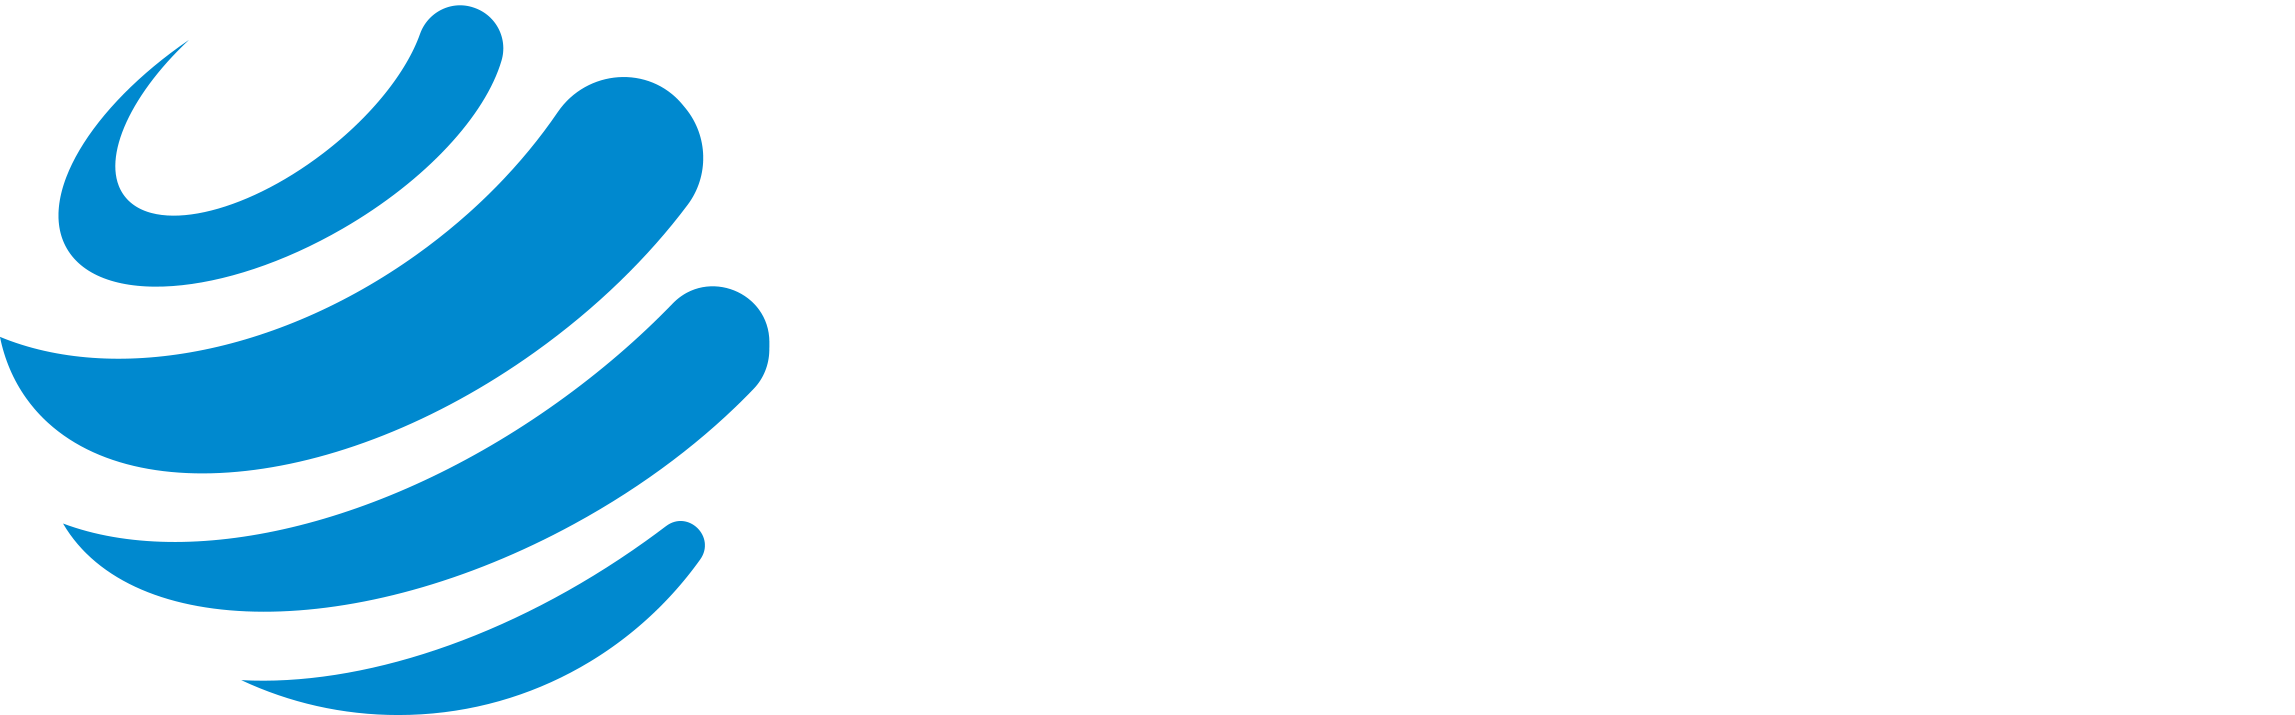 Dilc